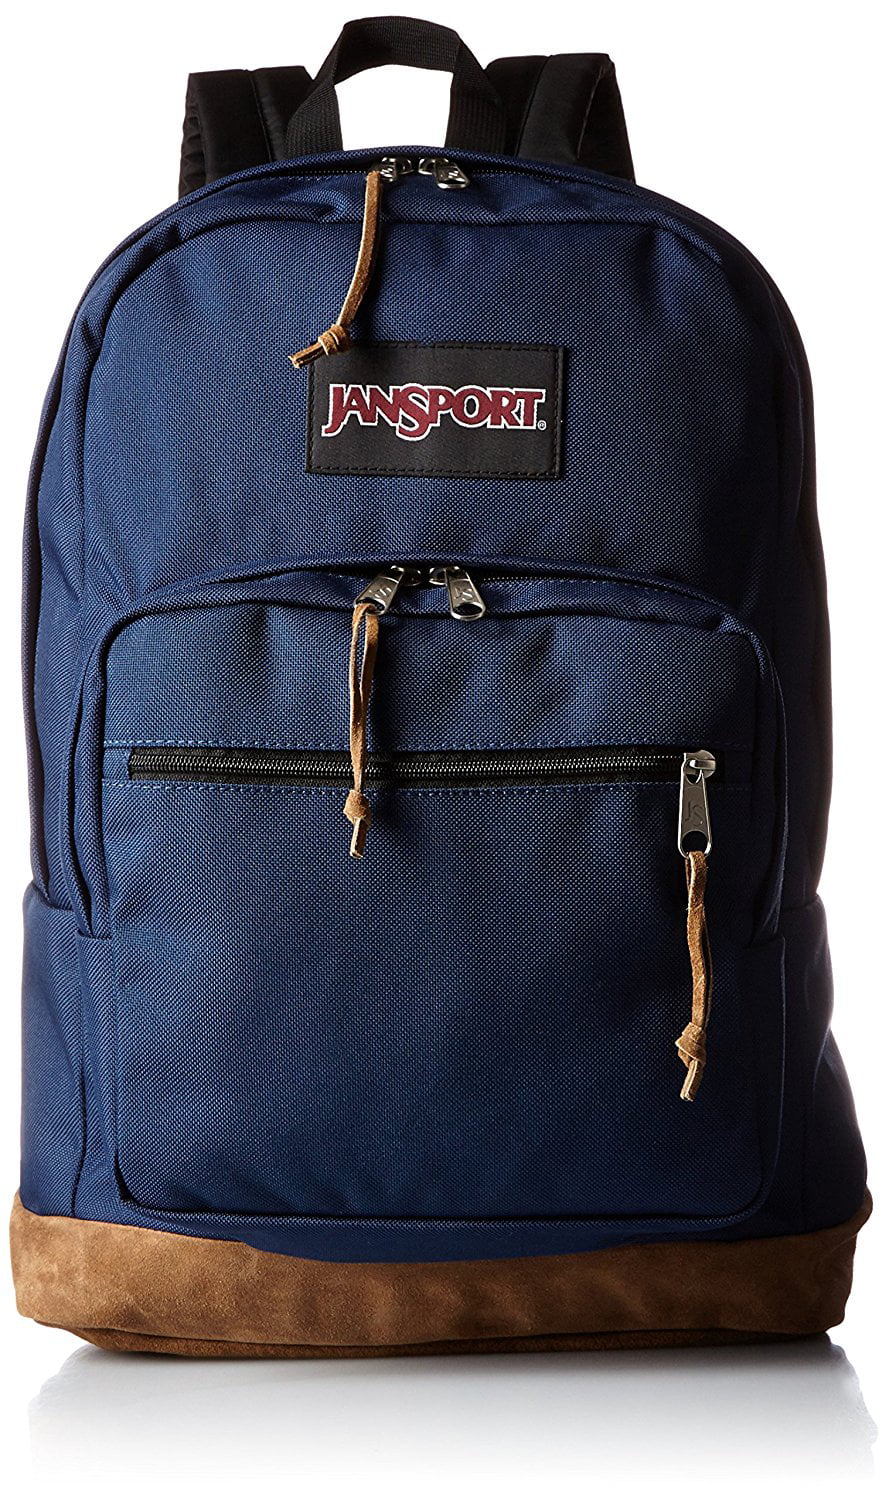 JanSport Right Pack Backpack - Navy - JS00TYP7003 - Walmart.com